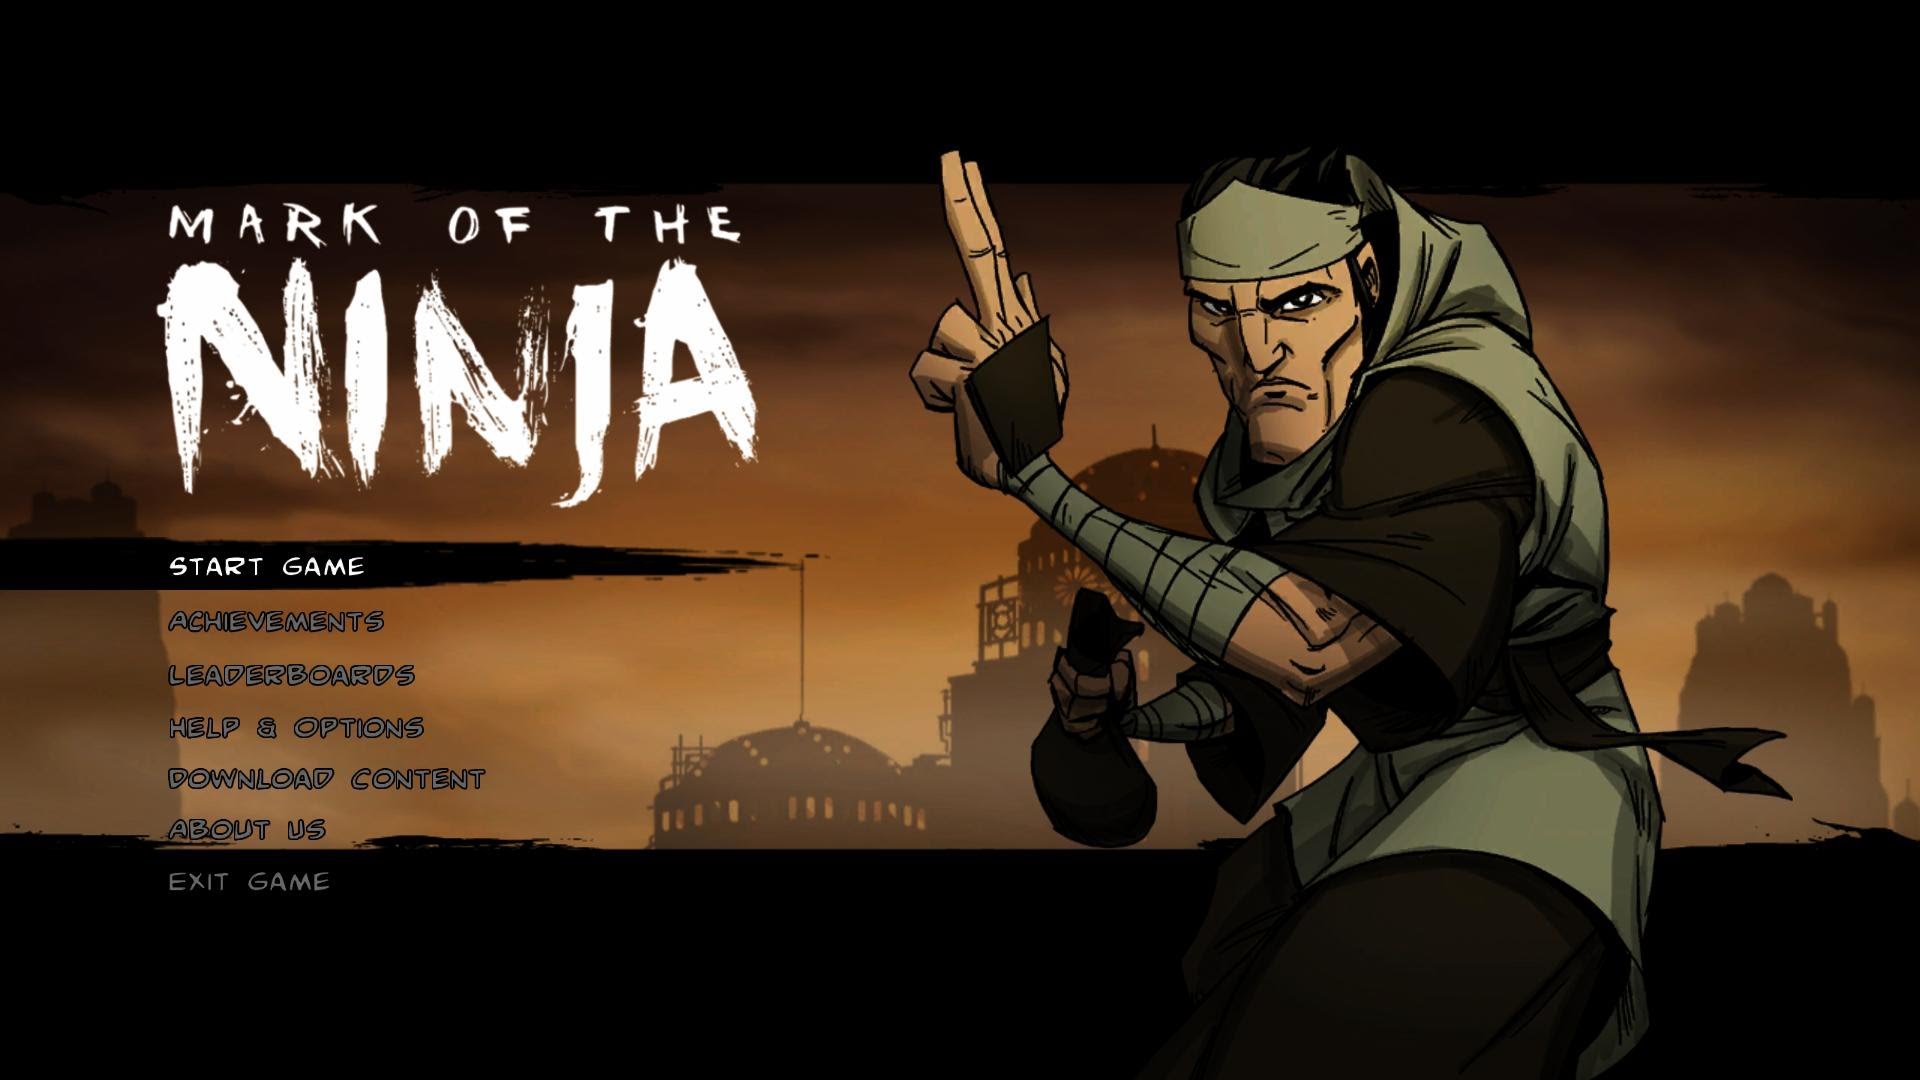 Mark Of The Ninja #2